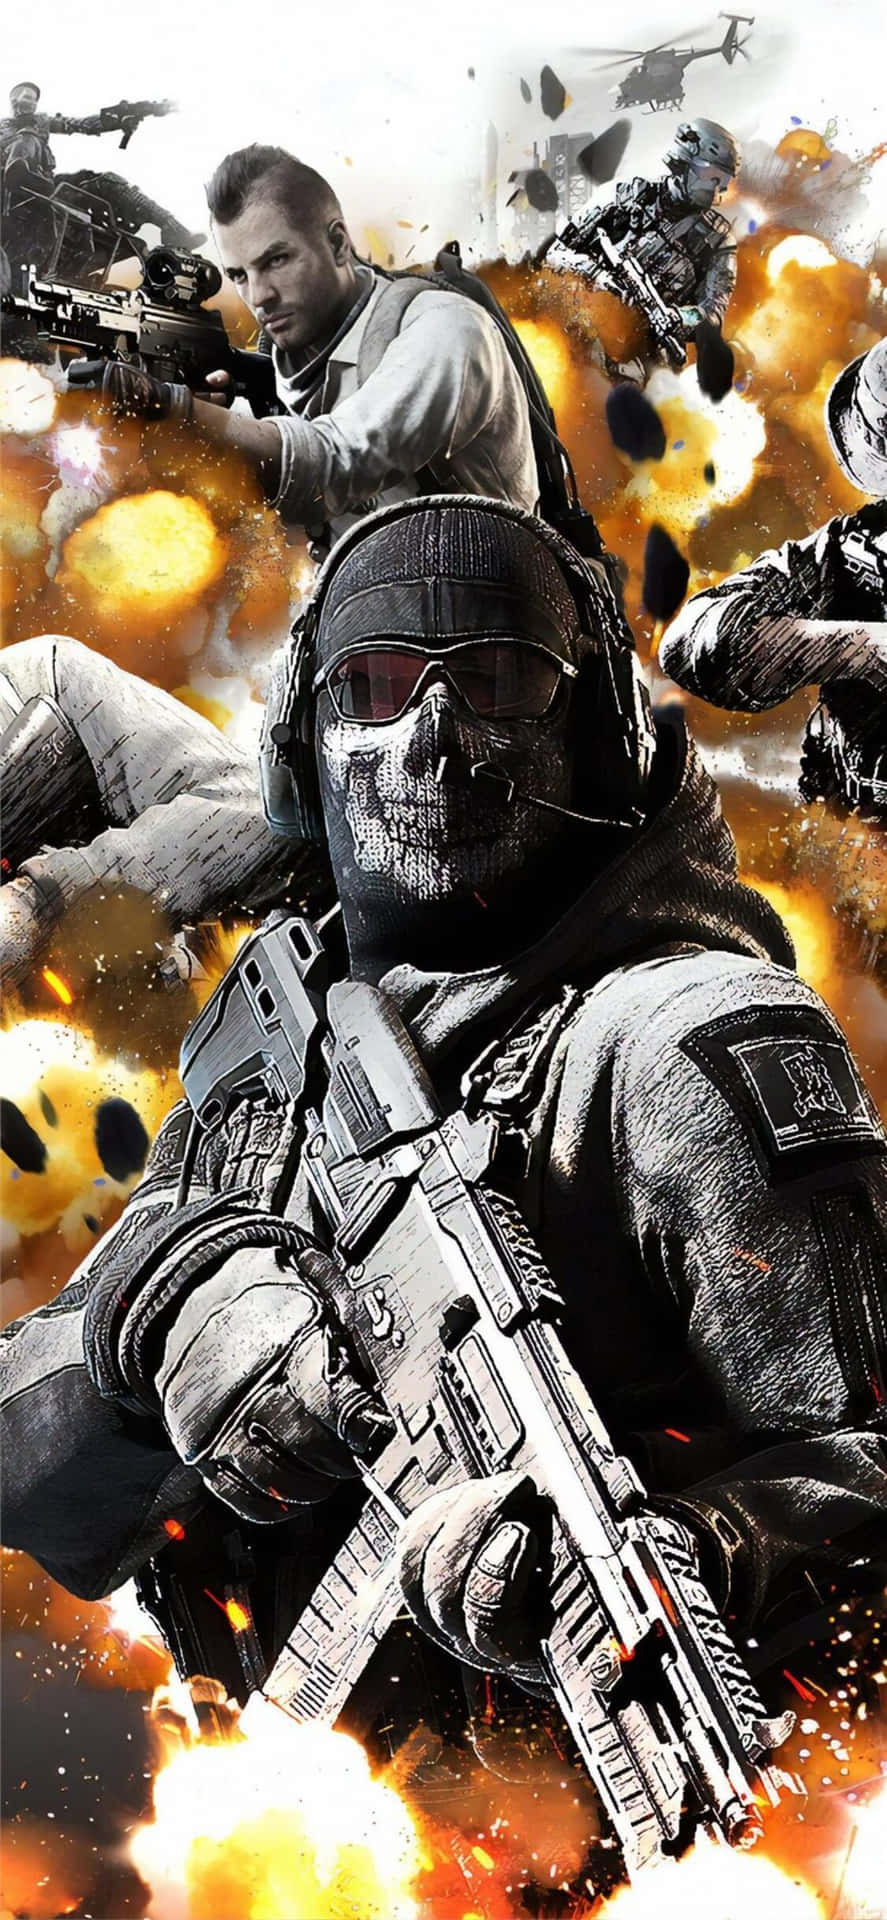 Dominawarzone Med Iphone Xs Call Of Duty Blackops Cold War På Din Dator- Eller Mobilbakgrund.